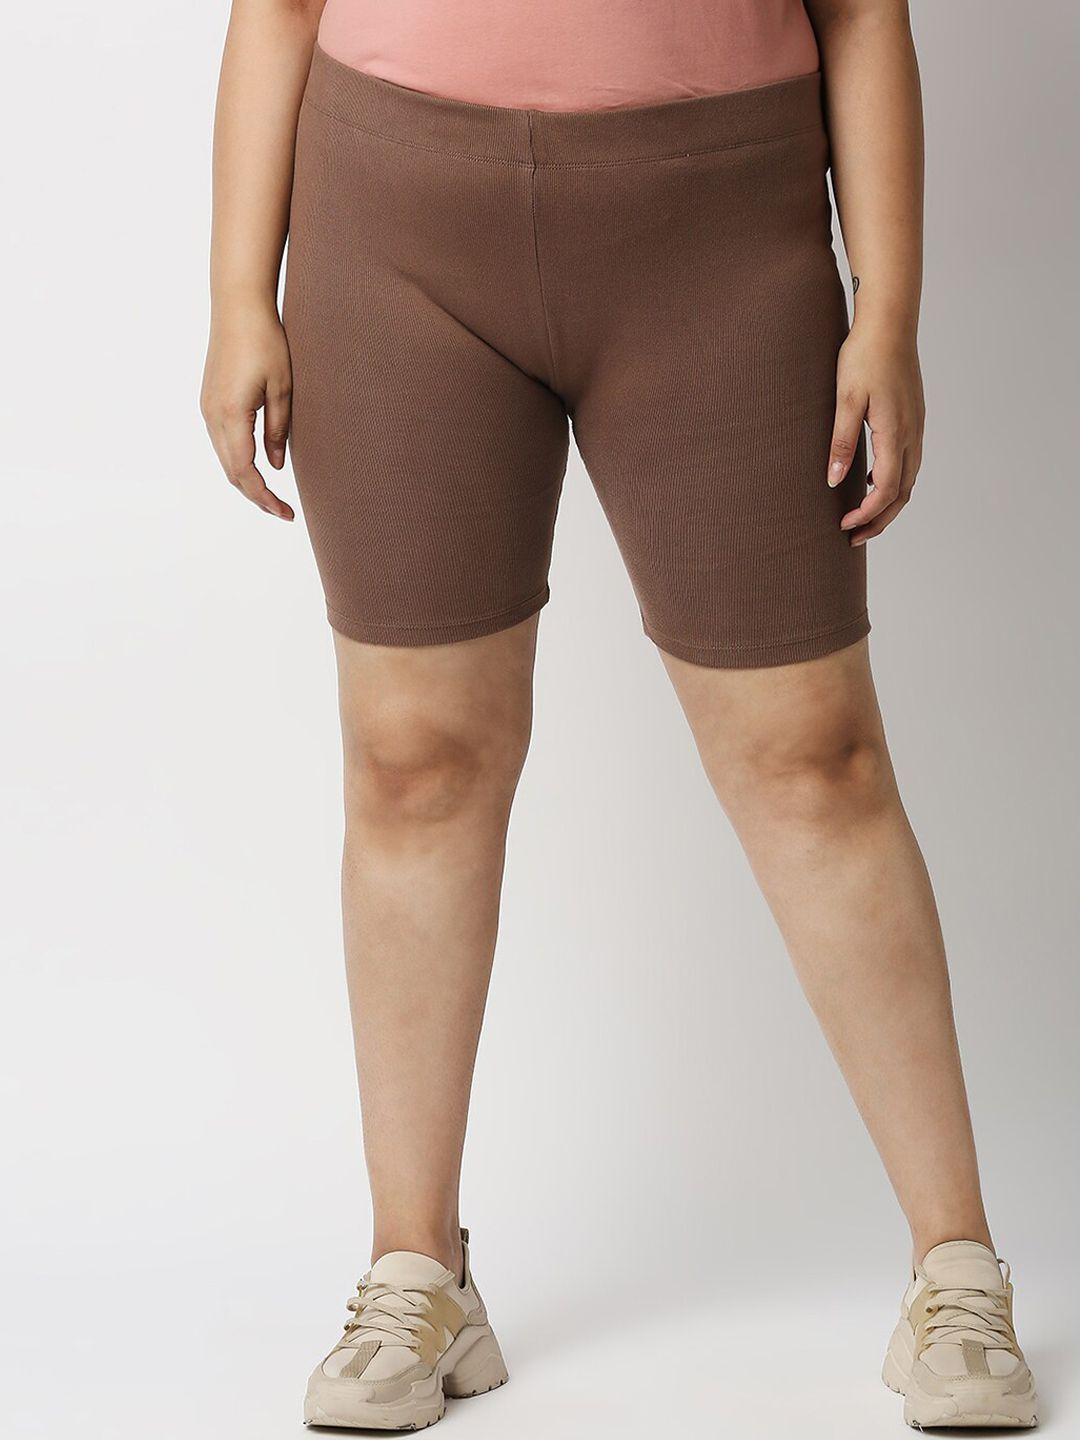 20dresses women brown slim fit cycling shorts